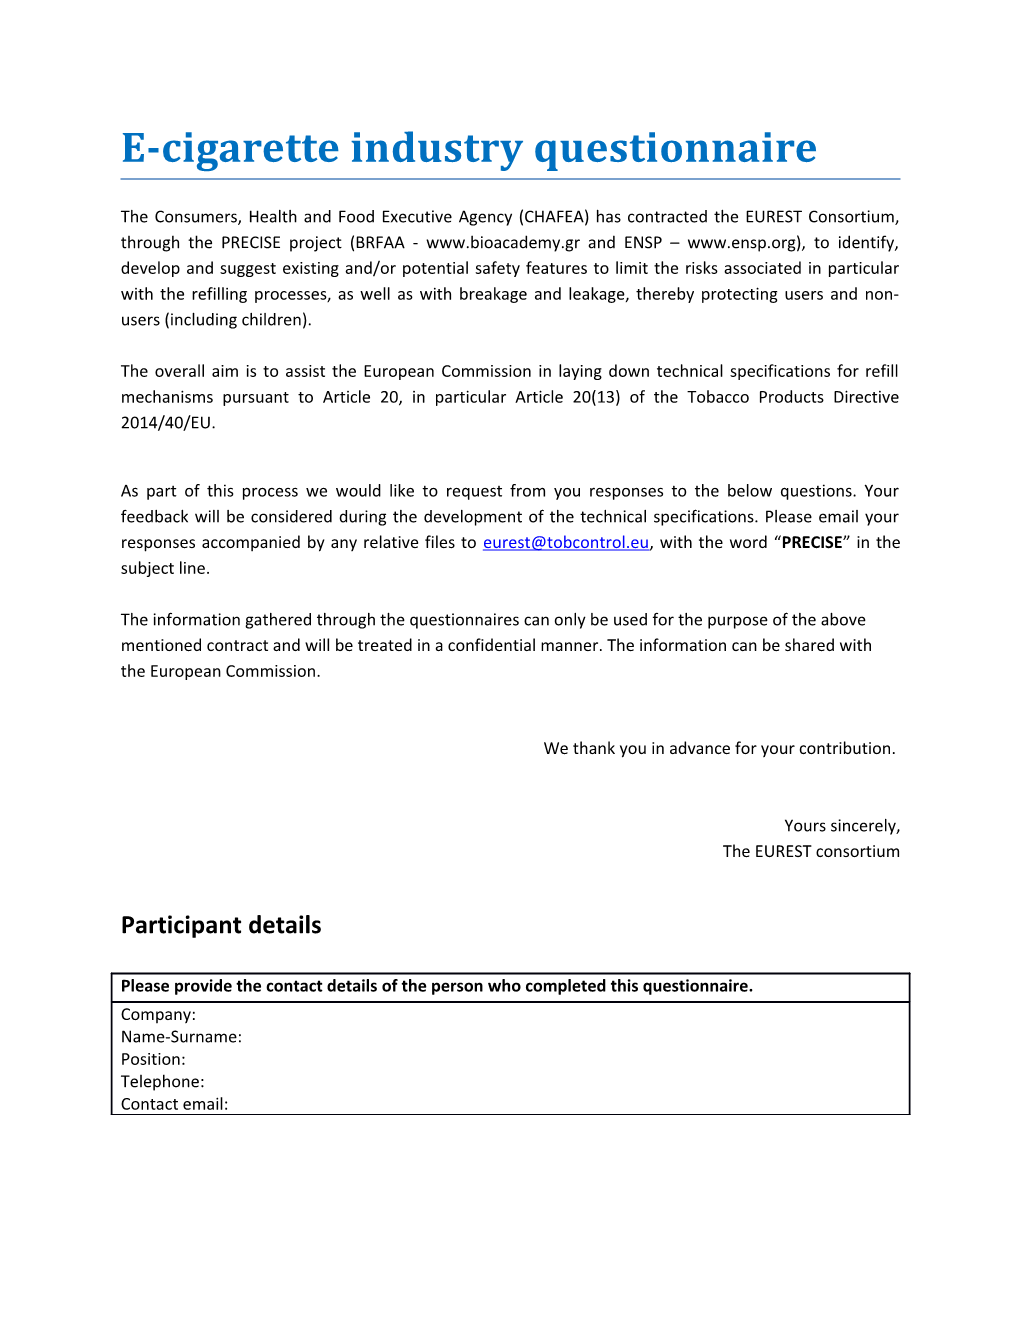 E-Cigaretteindustry Questionnaire